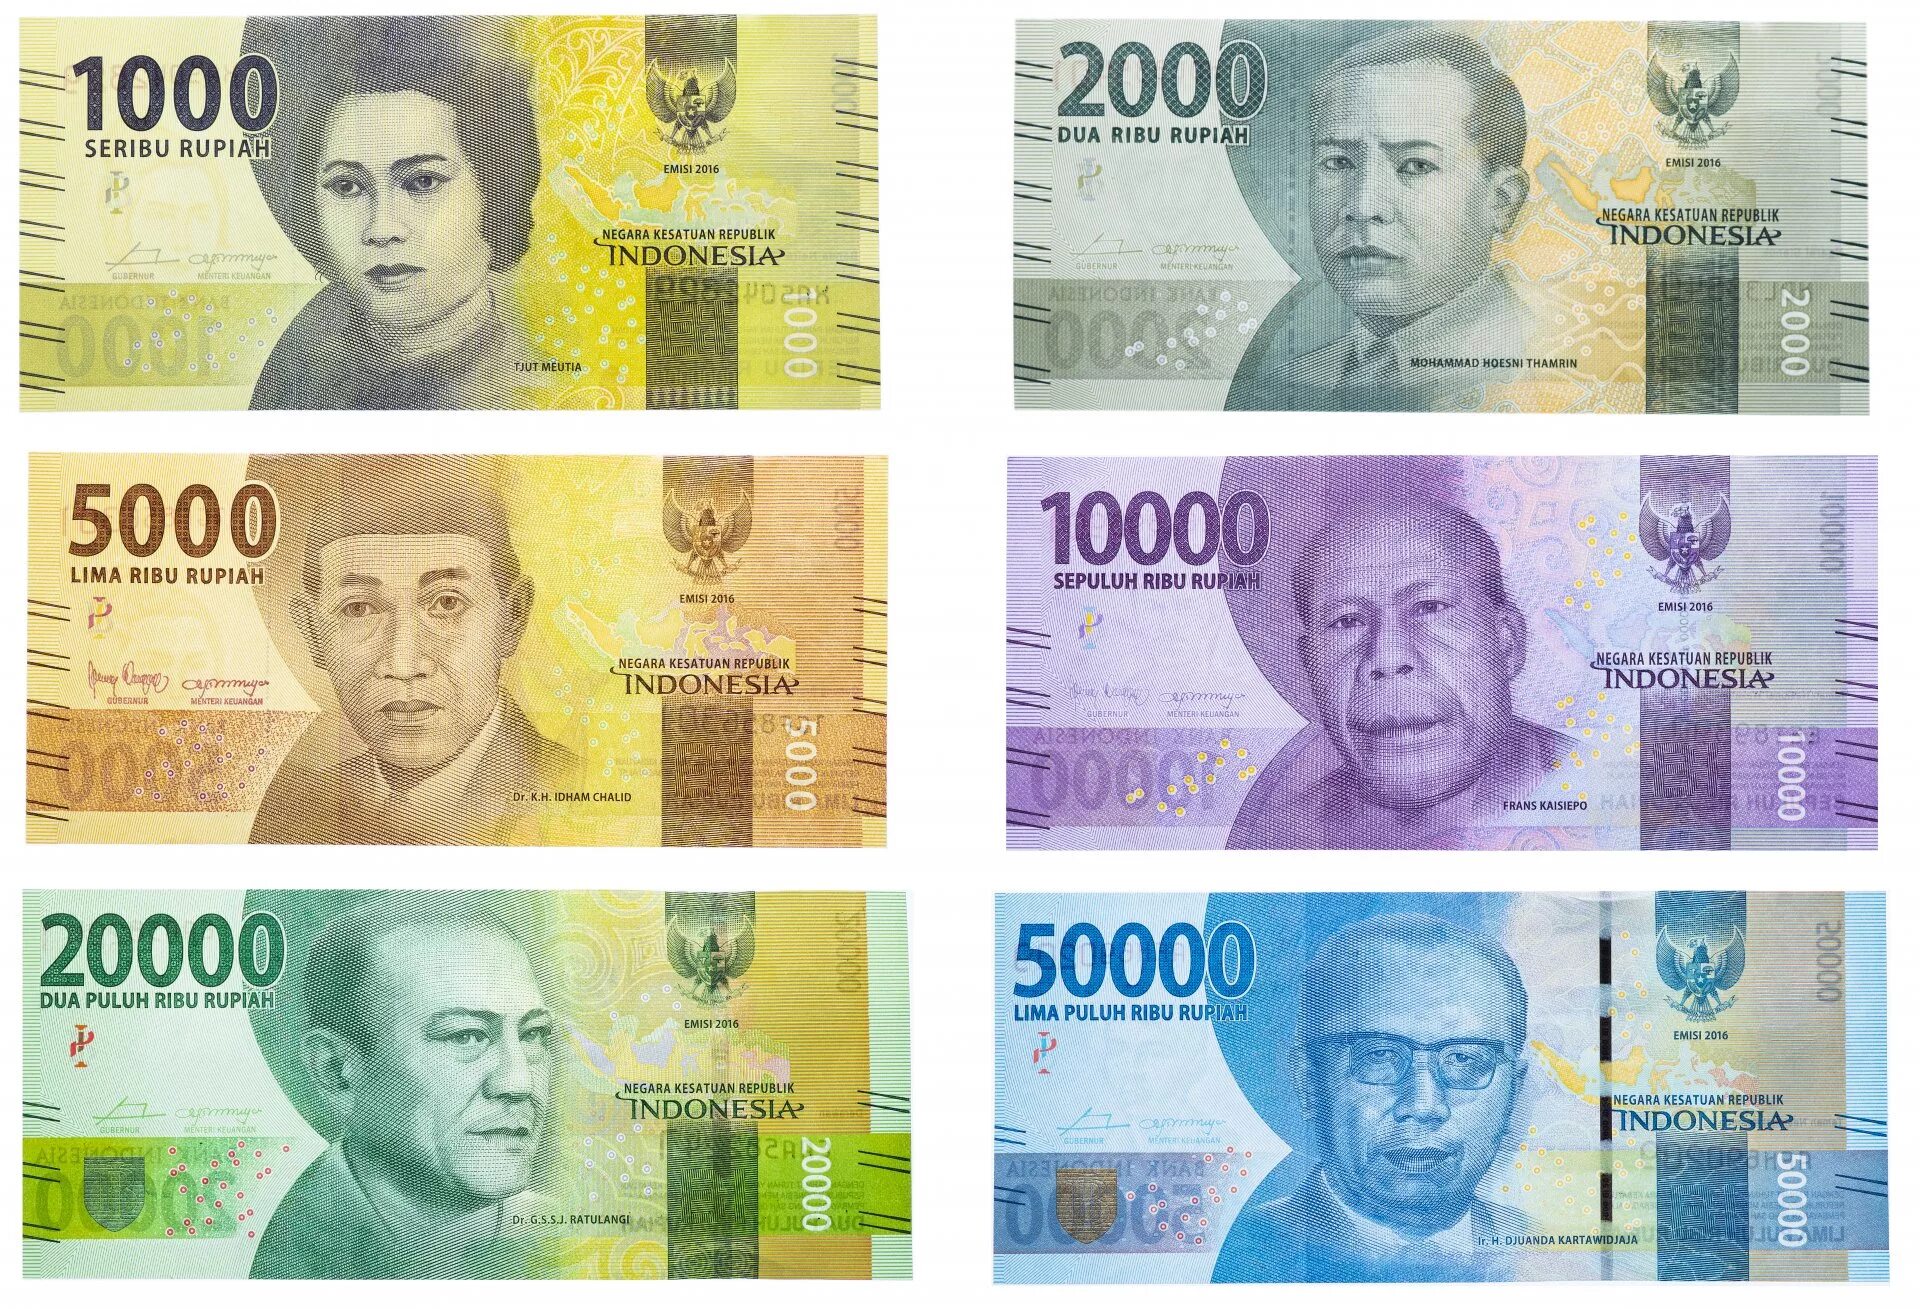 Рупий бали рубль. Индонезия 1000 рупий 2016. Индонезия 2000 рупий 2016. Индонезийская рупия банкноты. 1000 Индонезийских рупий.